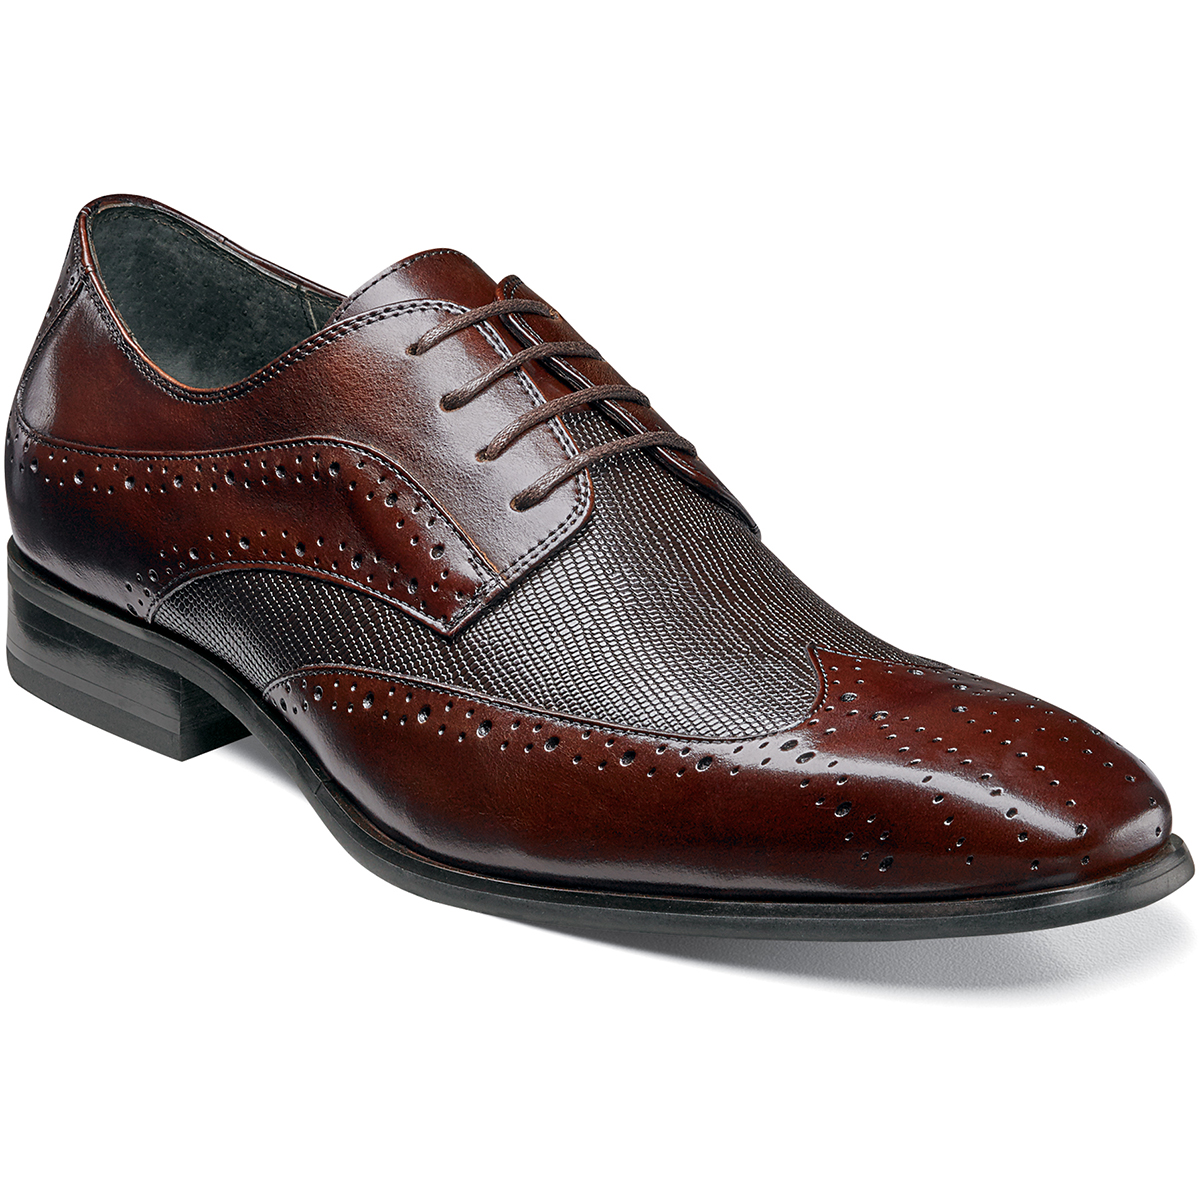 Maximillian - Brown - CLEARANCE - Mens Shoes - stacyadams.com